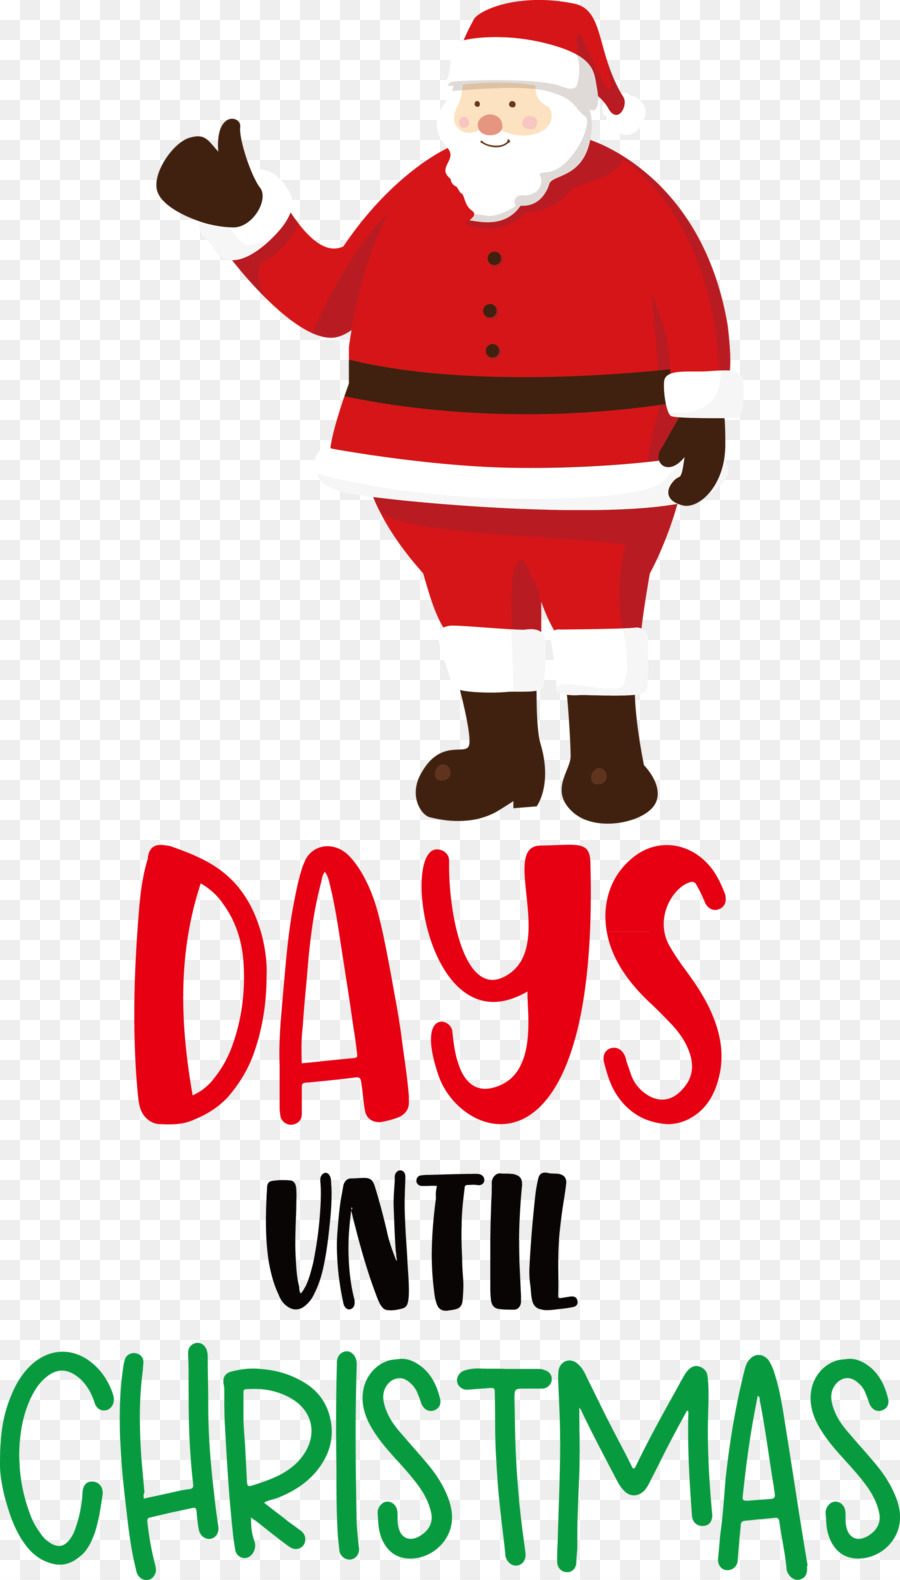 Days until Christmas Christmas Santa Claus